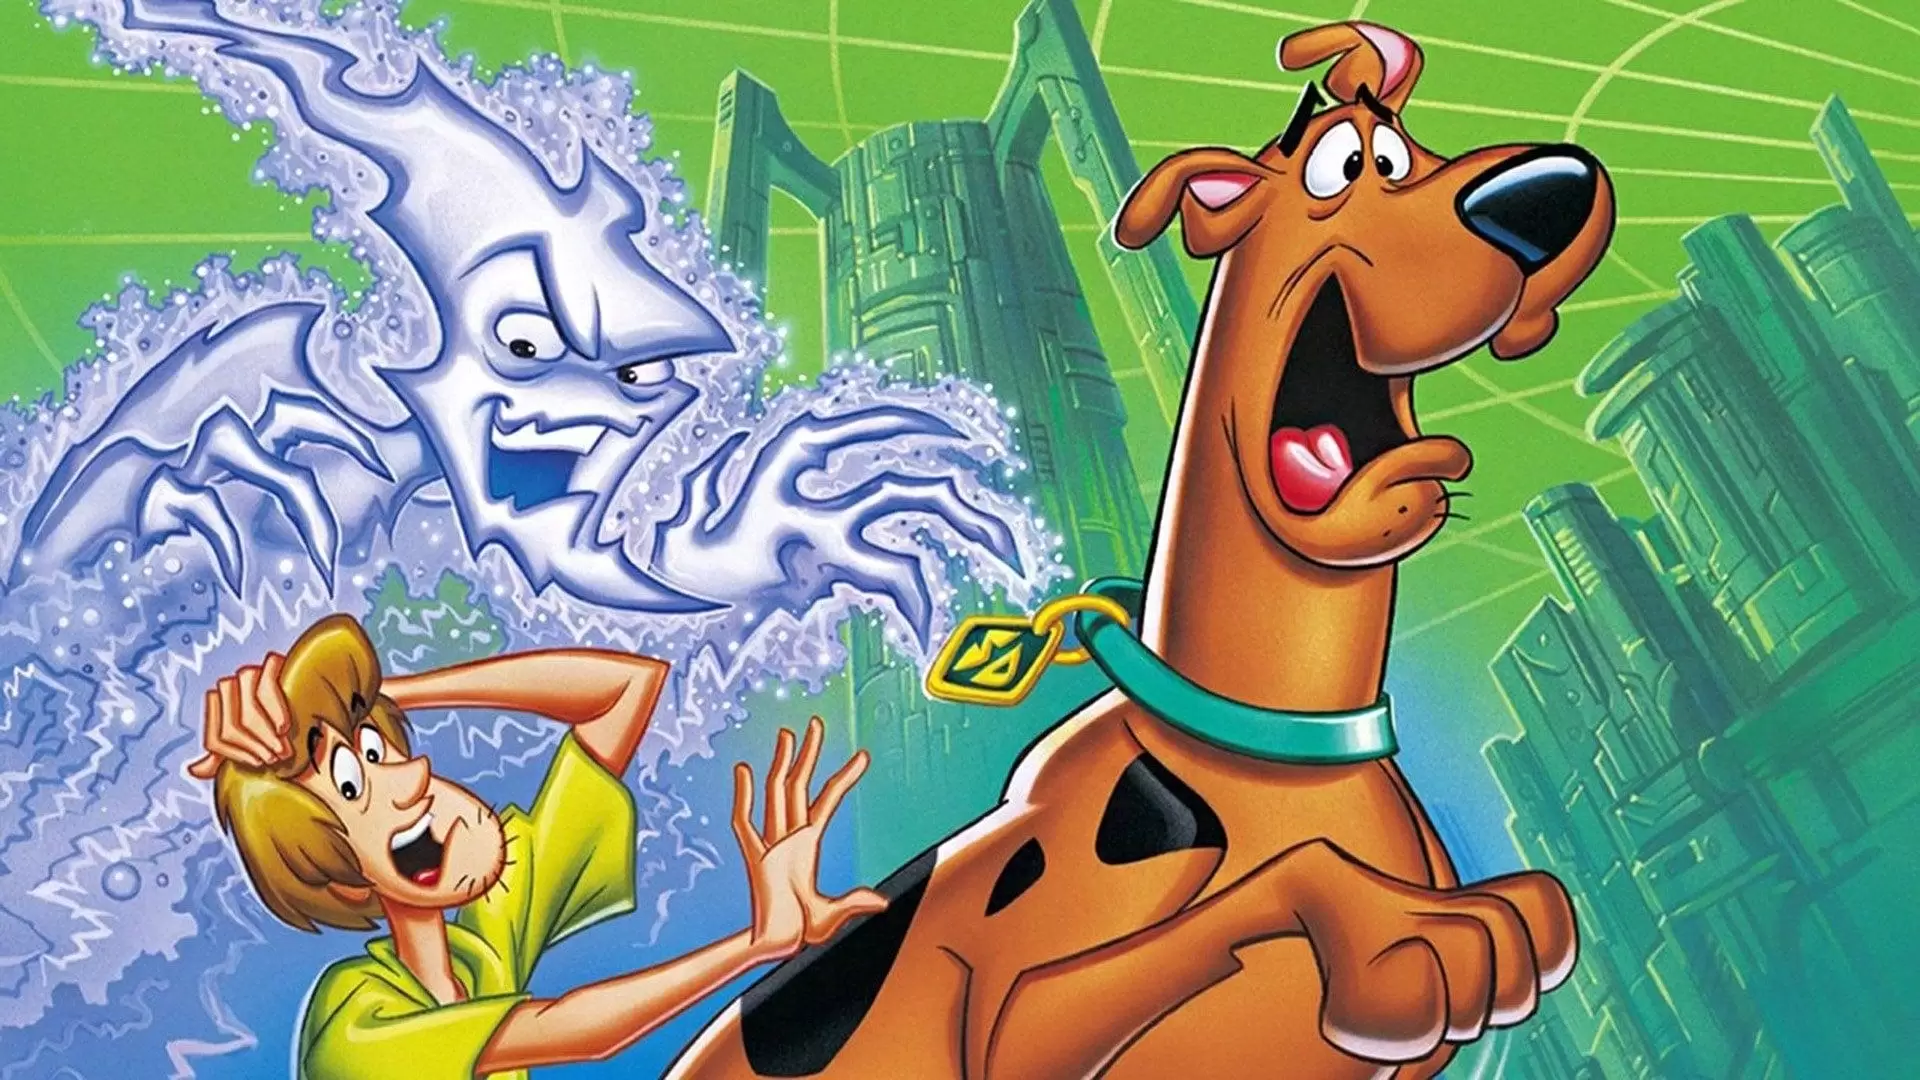 دانلود انیمیشن Scooby-Doo and the Cyber Chase 2001 با زیرنویس فارسی